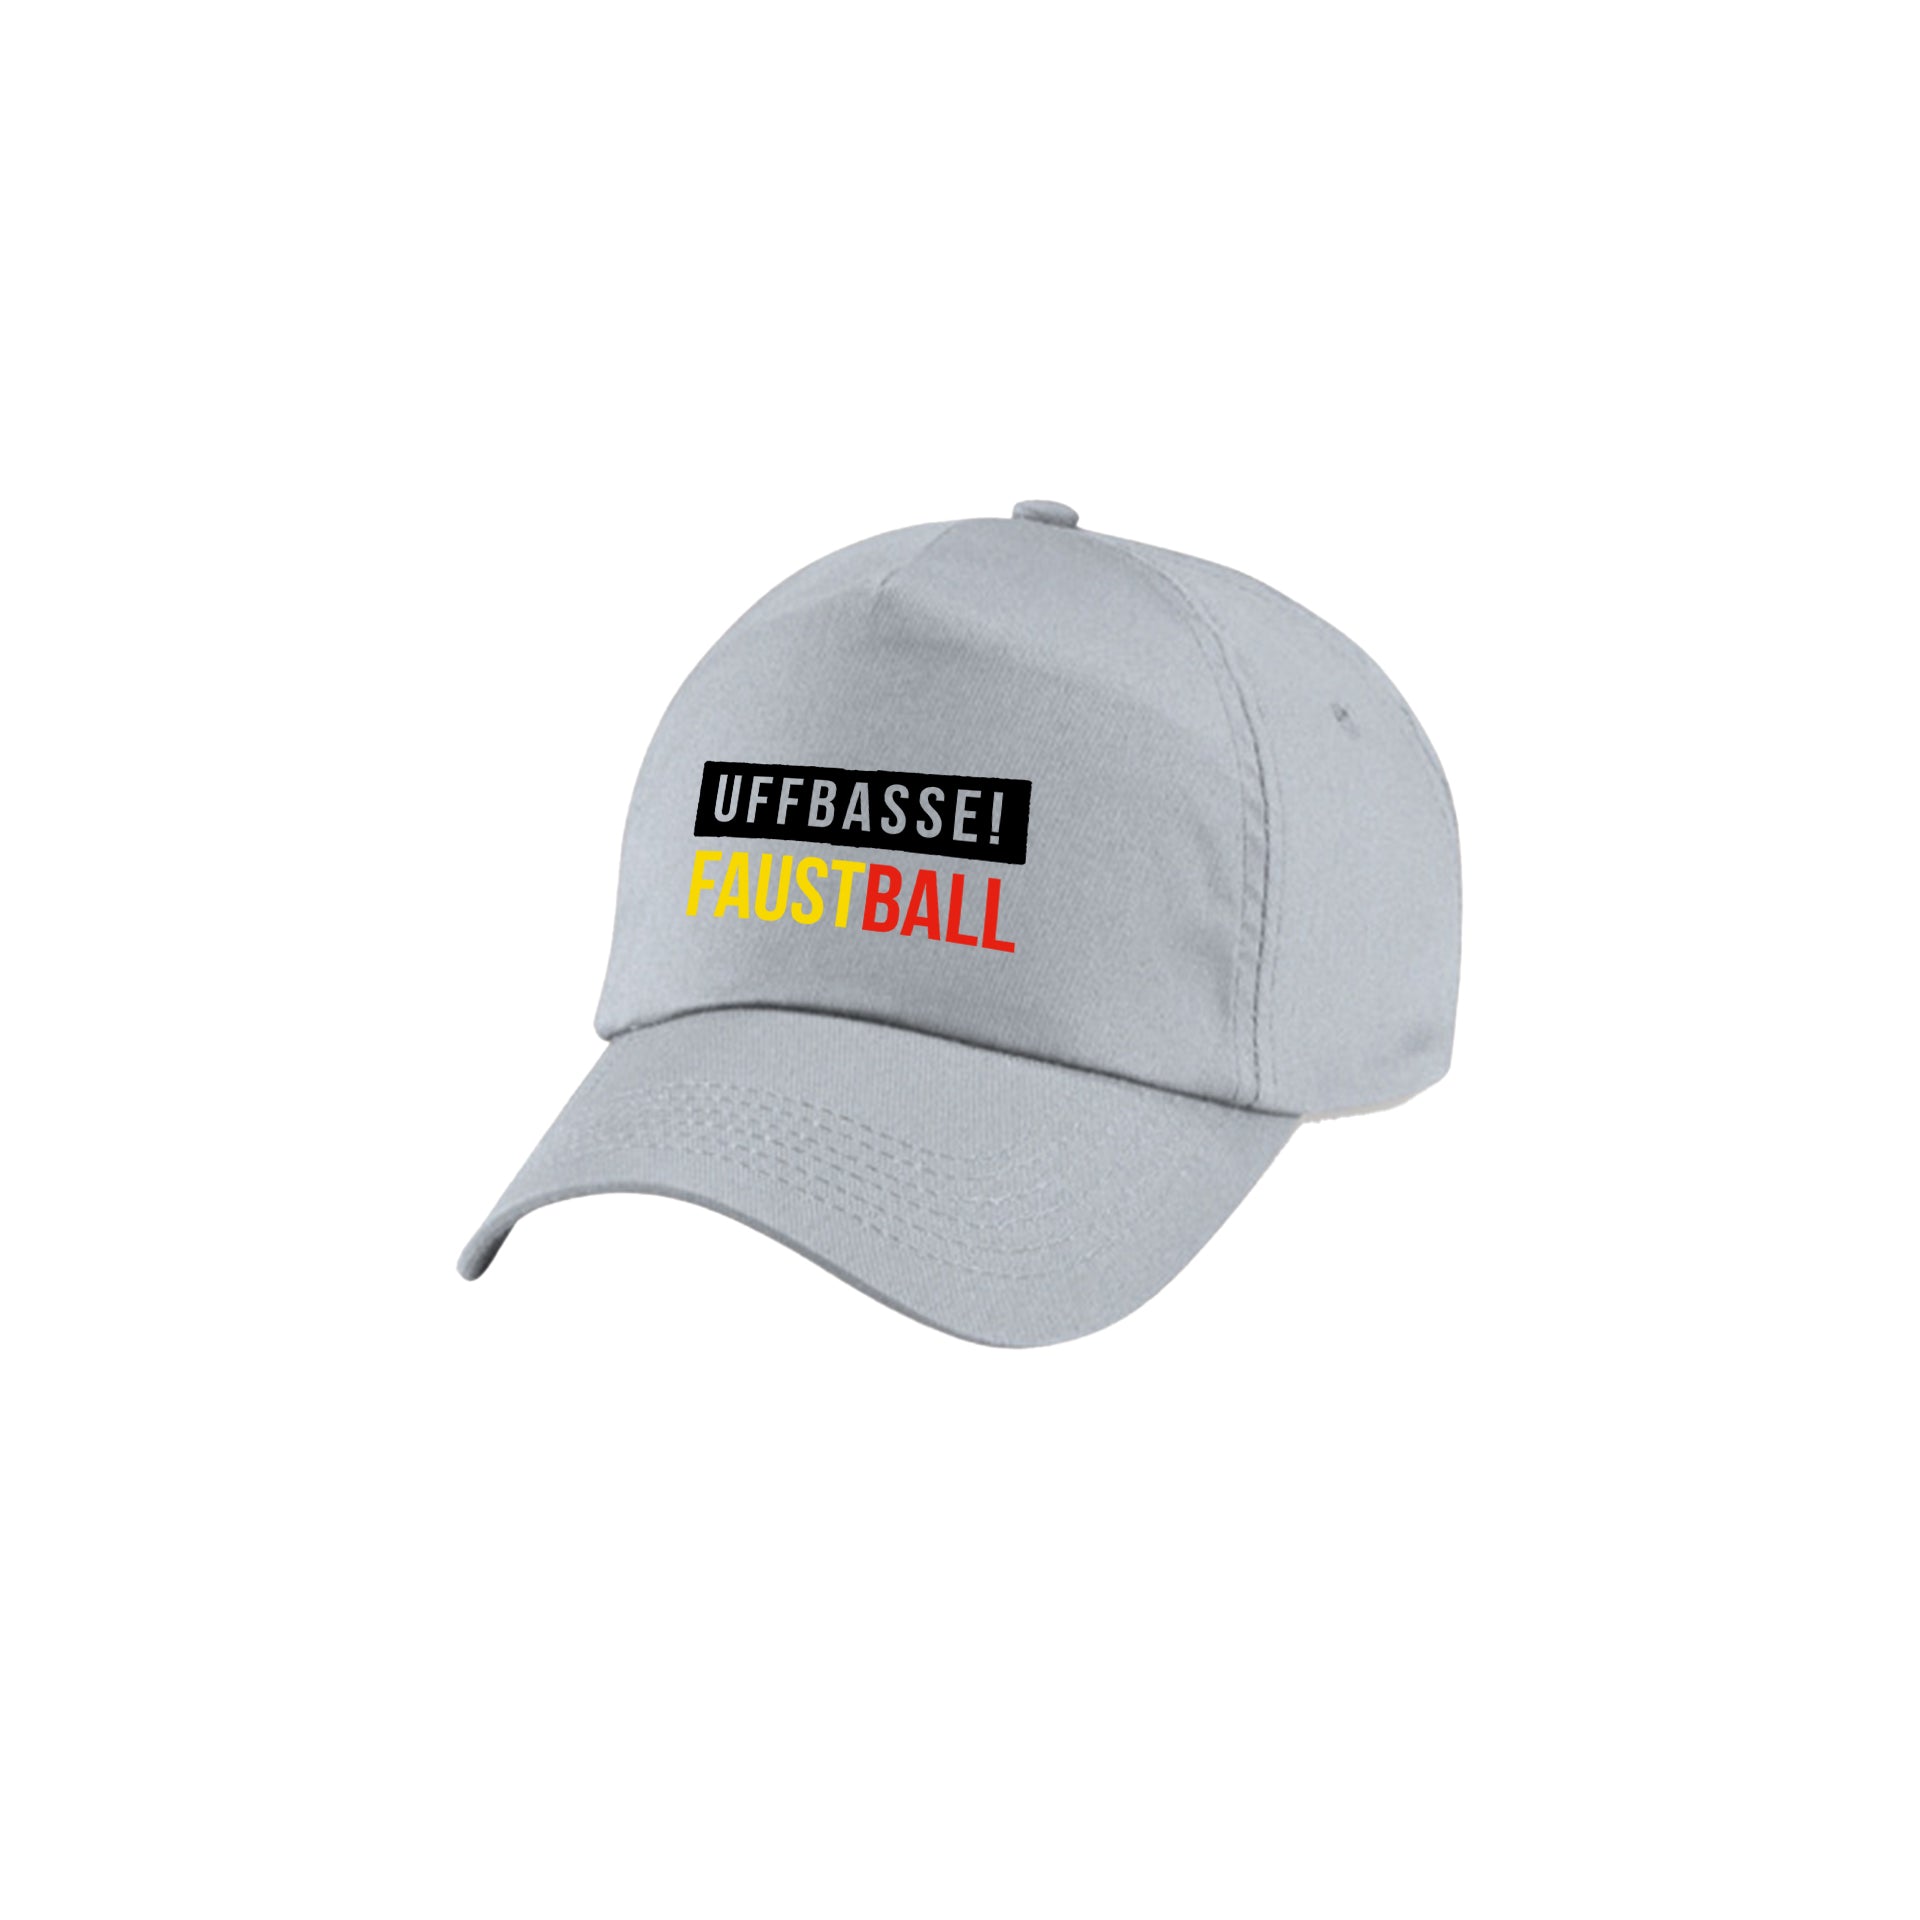 Faustball Caps (Deutschland Edition)